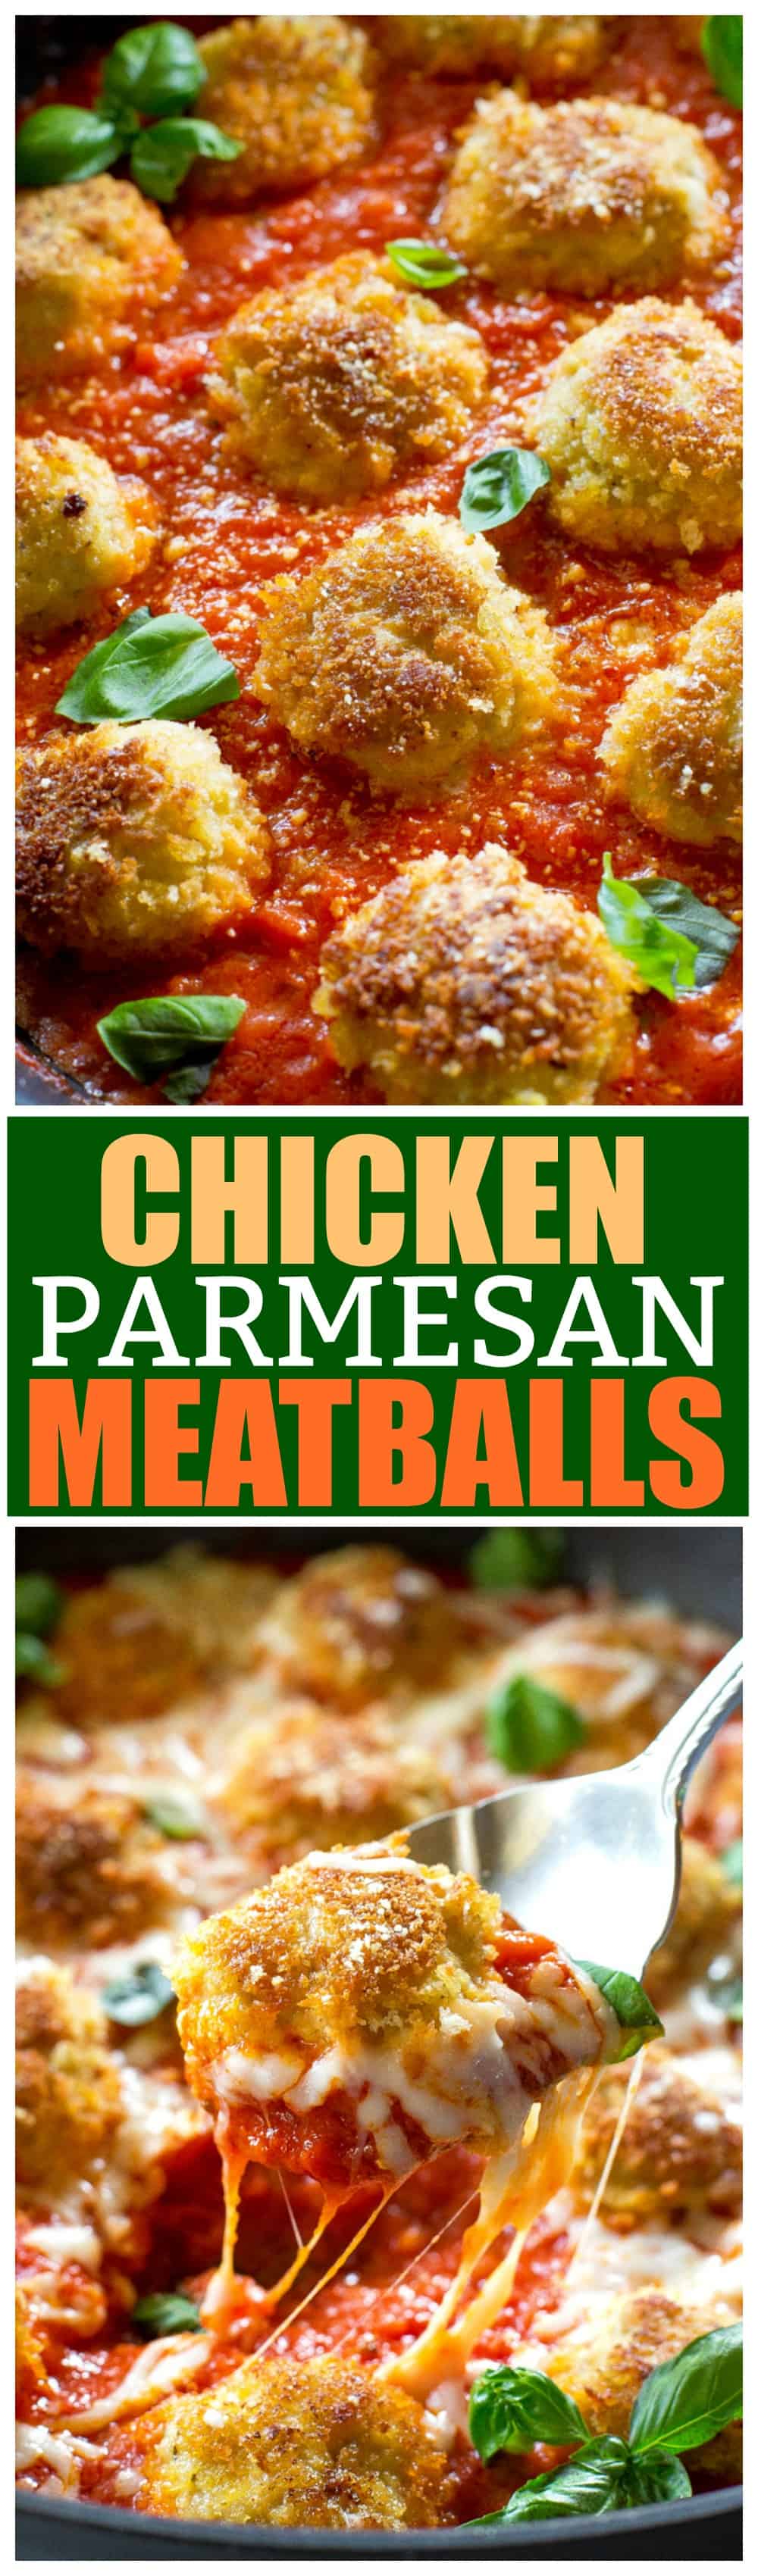 chicken parmesan meatballs